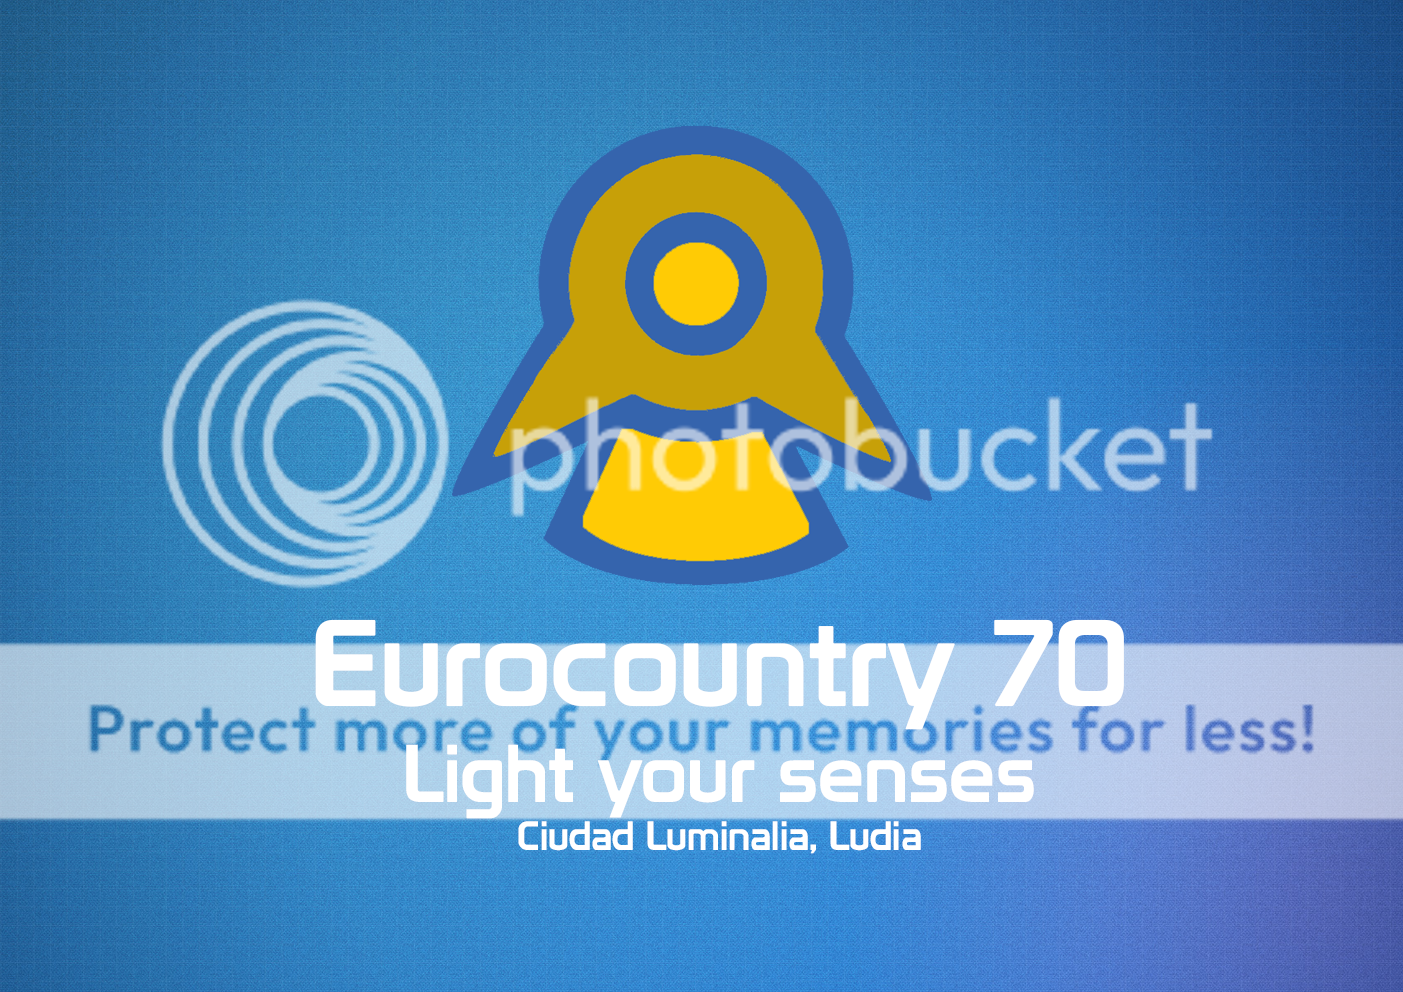 [APUESTAS] Eurocountry 70: Light your senses in Ludia 06271290-1ecd-4576-84e7-d40a19d96ebf-original